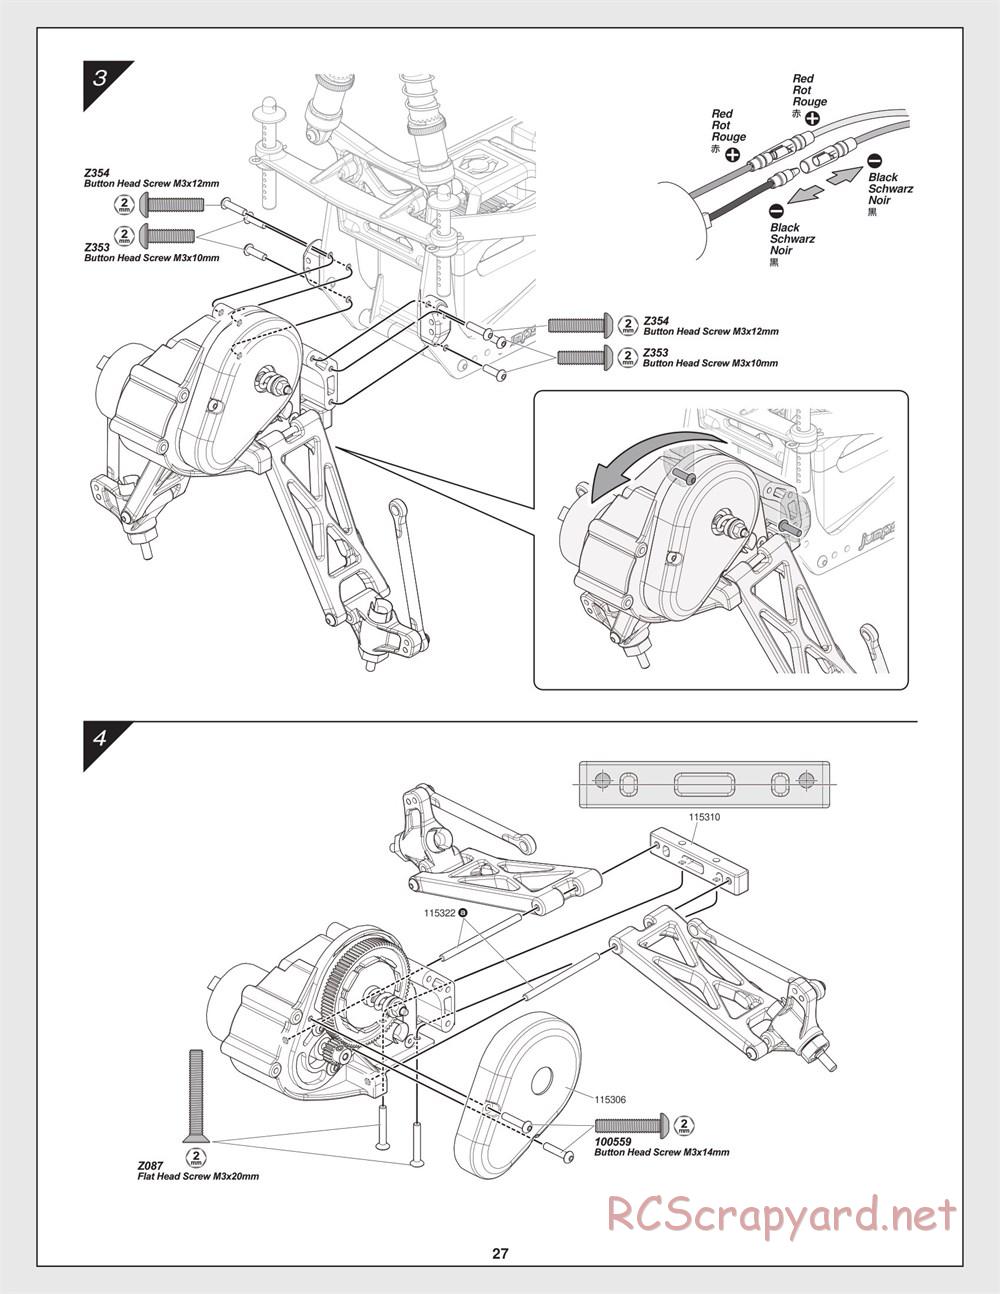 HPI - Jumpshot ST - Manual - Page 27